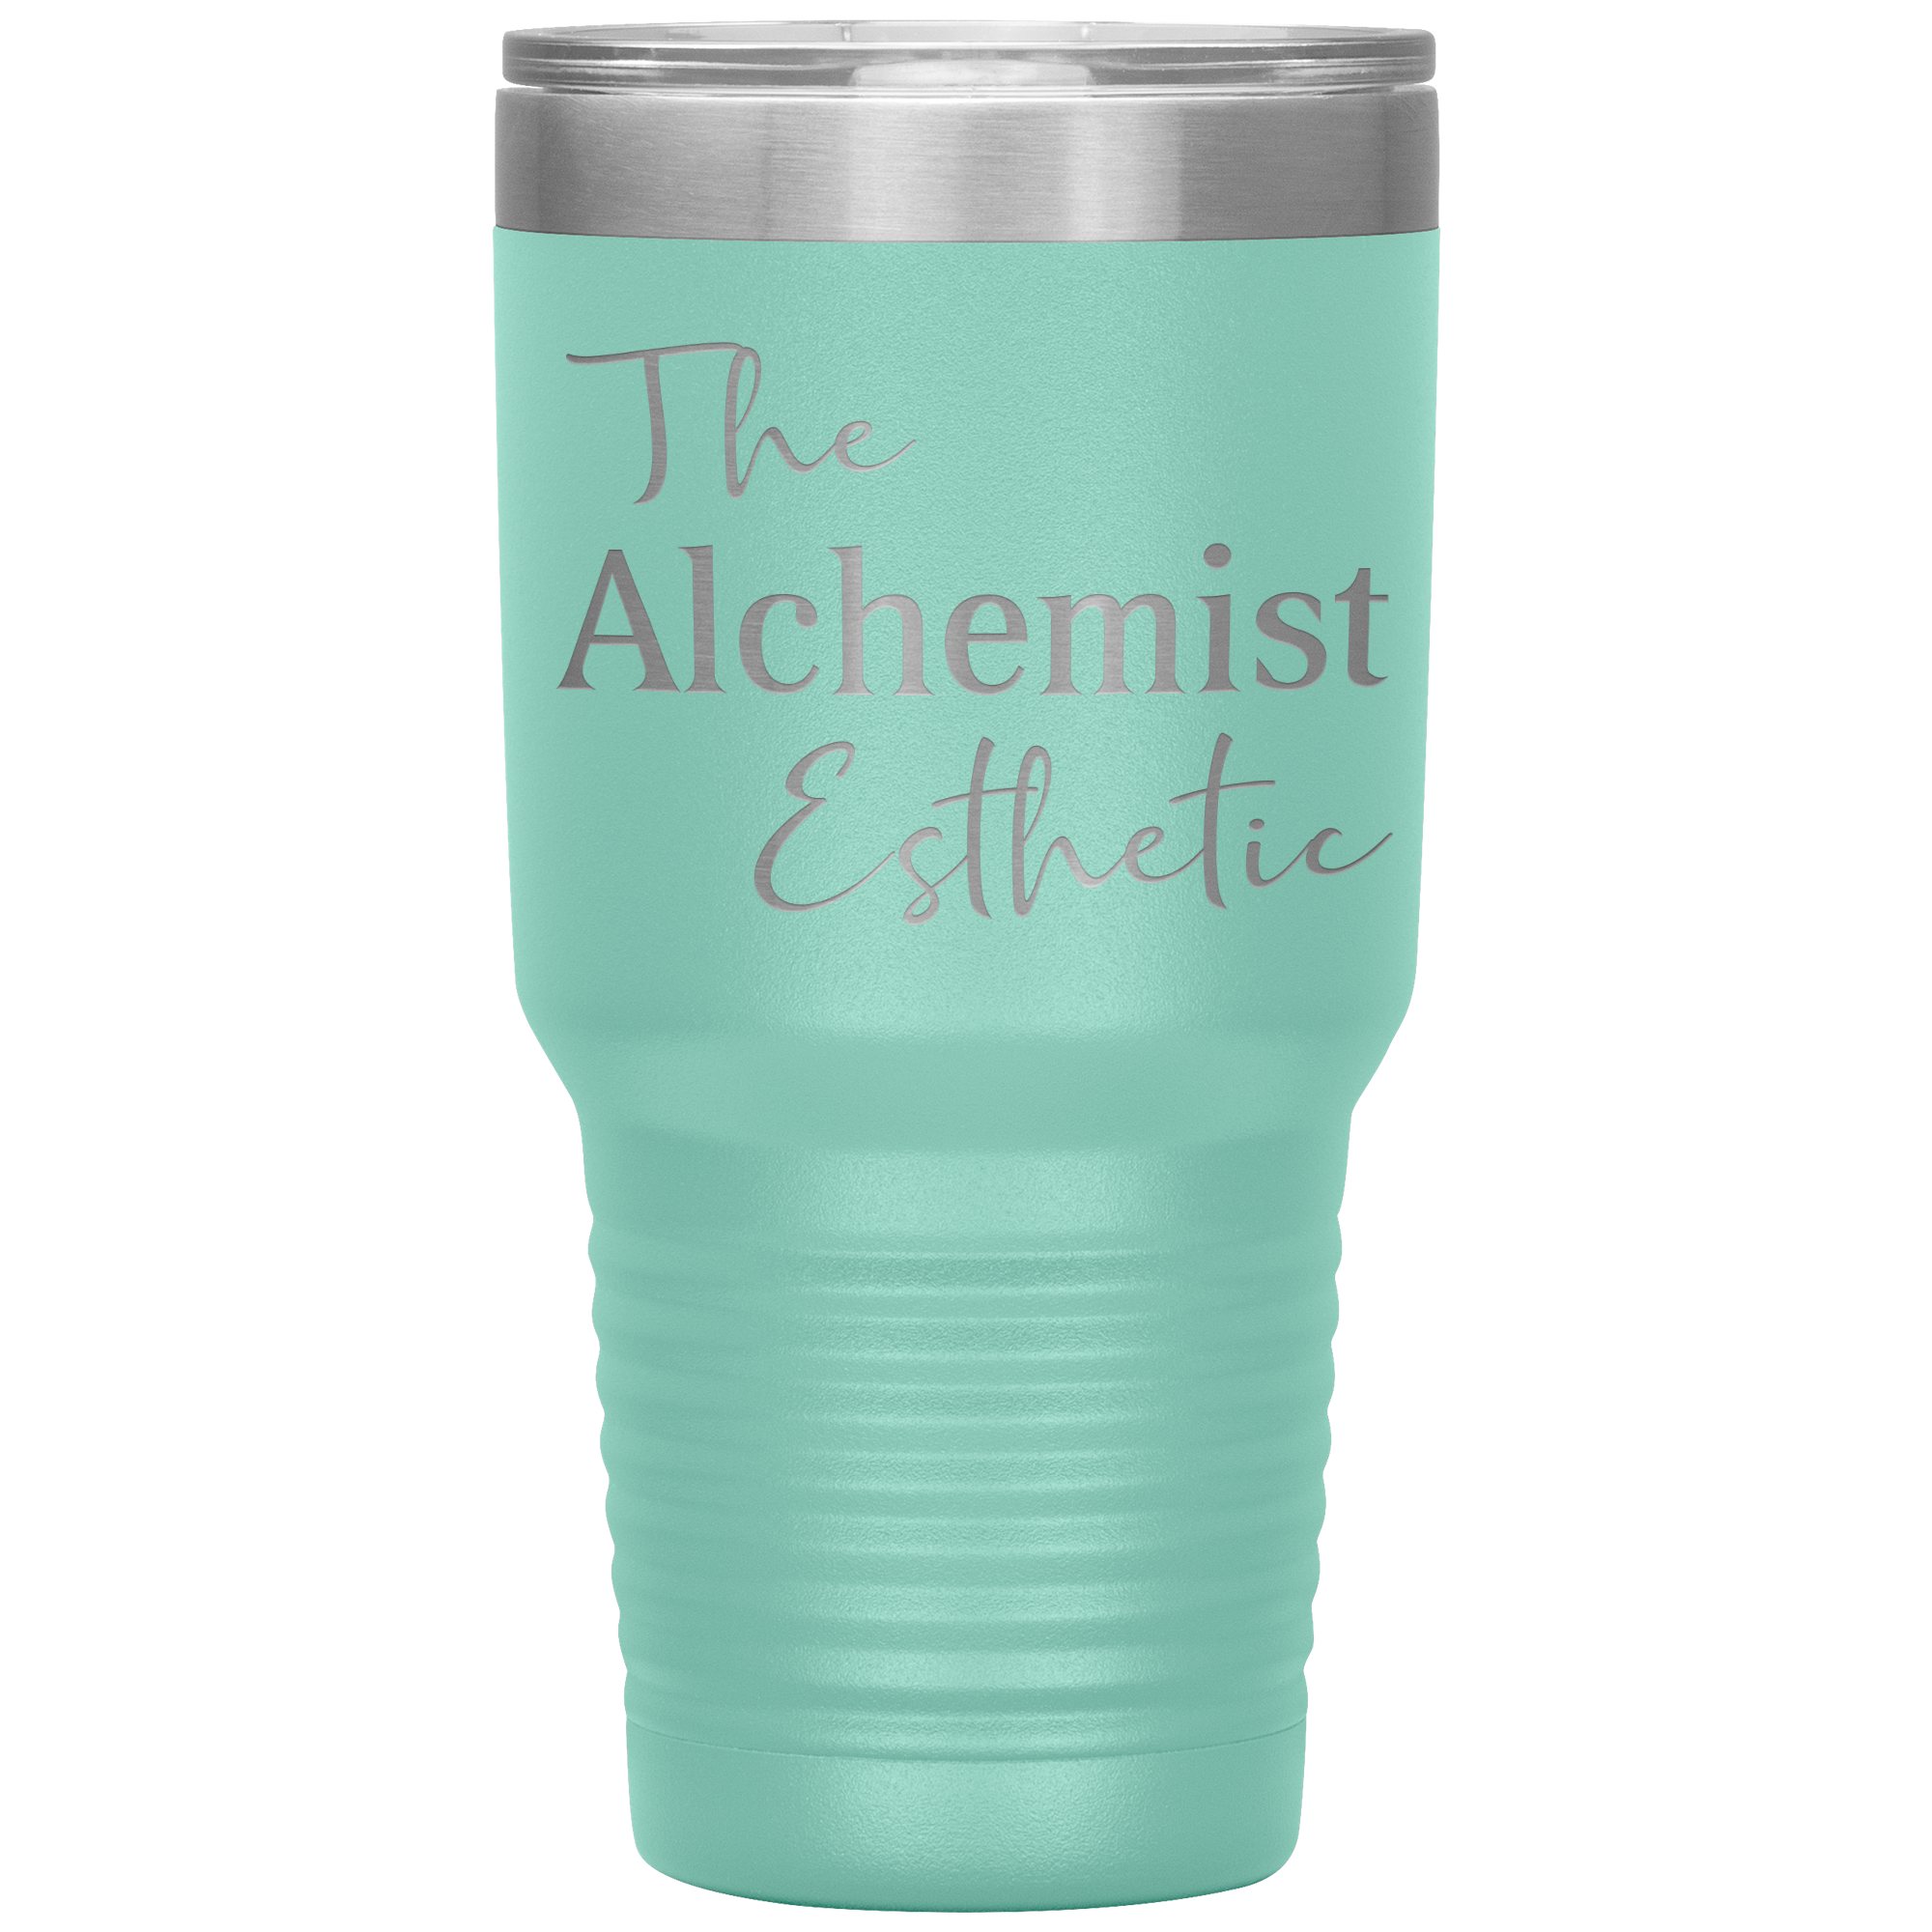 The Alchemist Esthetic - Tumbler